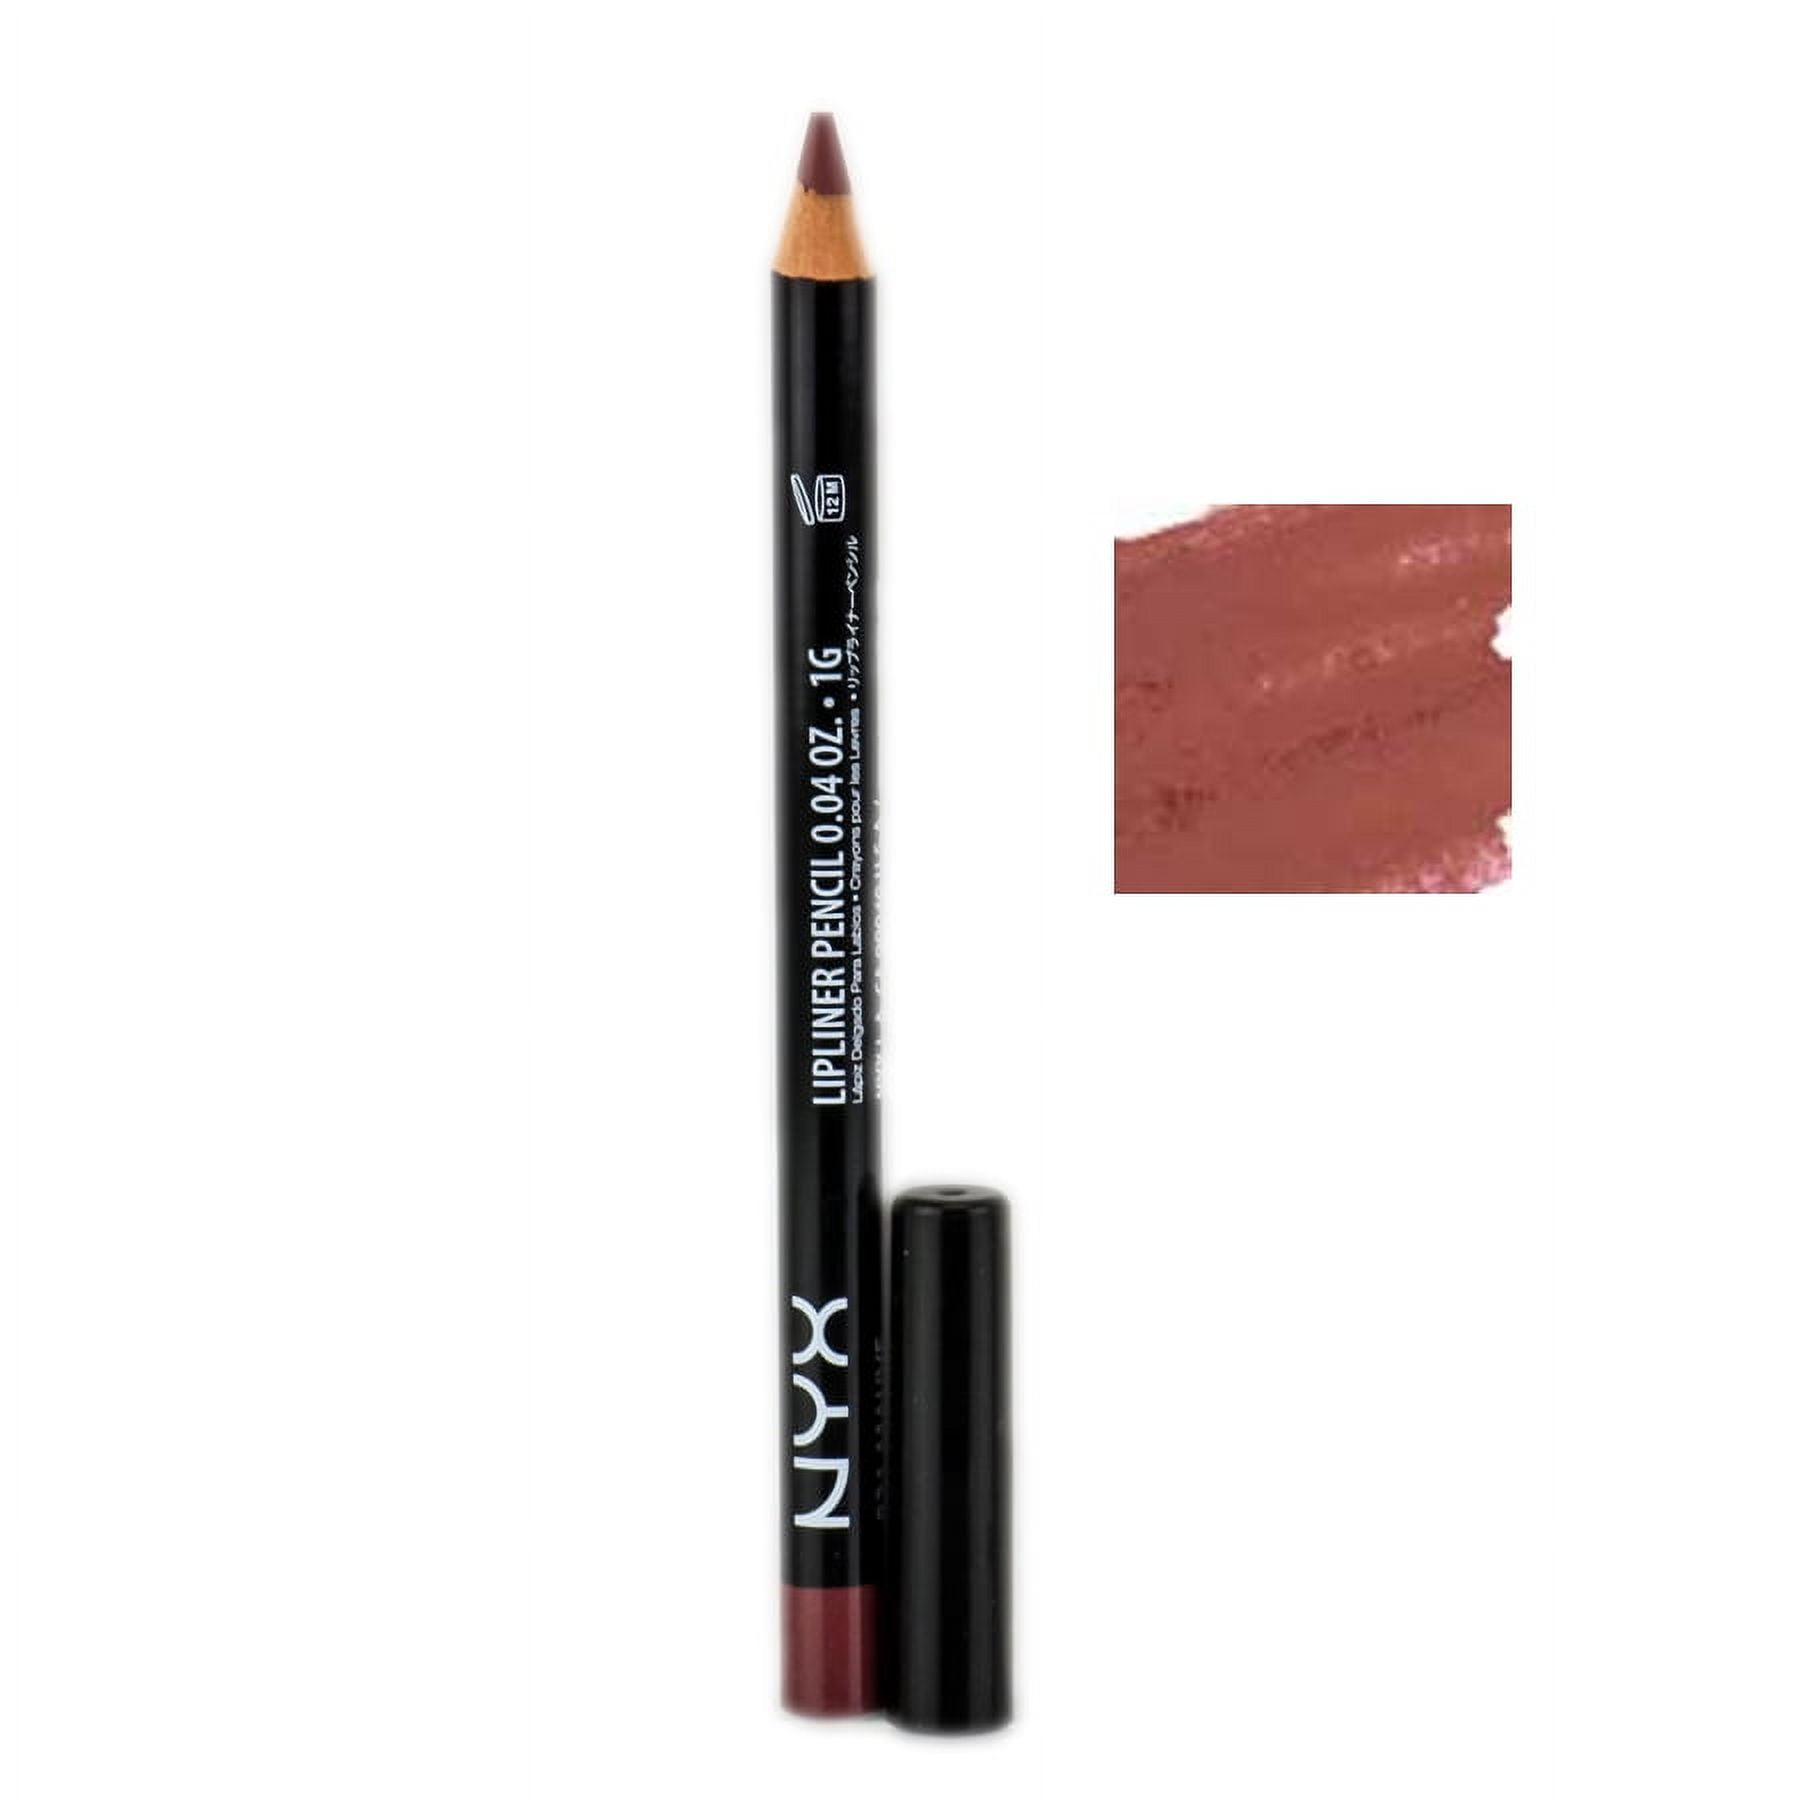 NYX Professional Makeup Slim Lip Liner, Long-Lasting Pencil, oz. Pale Lip 0.035 Pink, Creamy